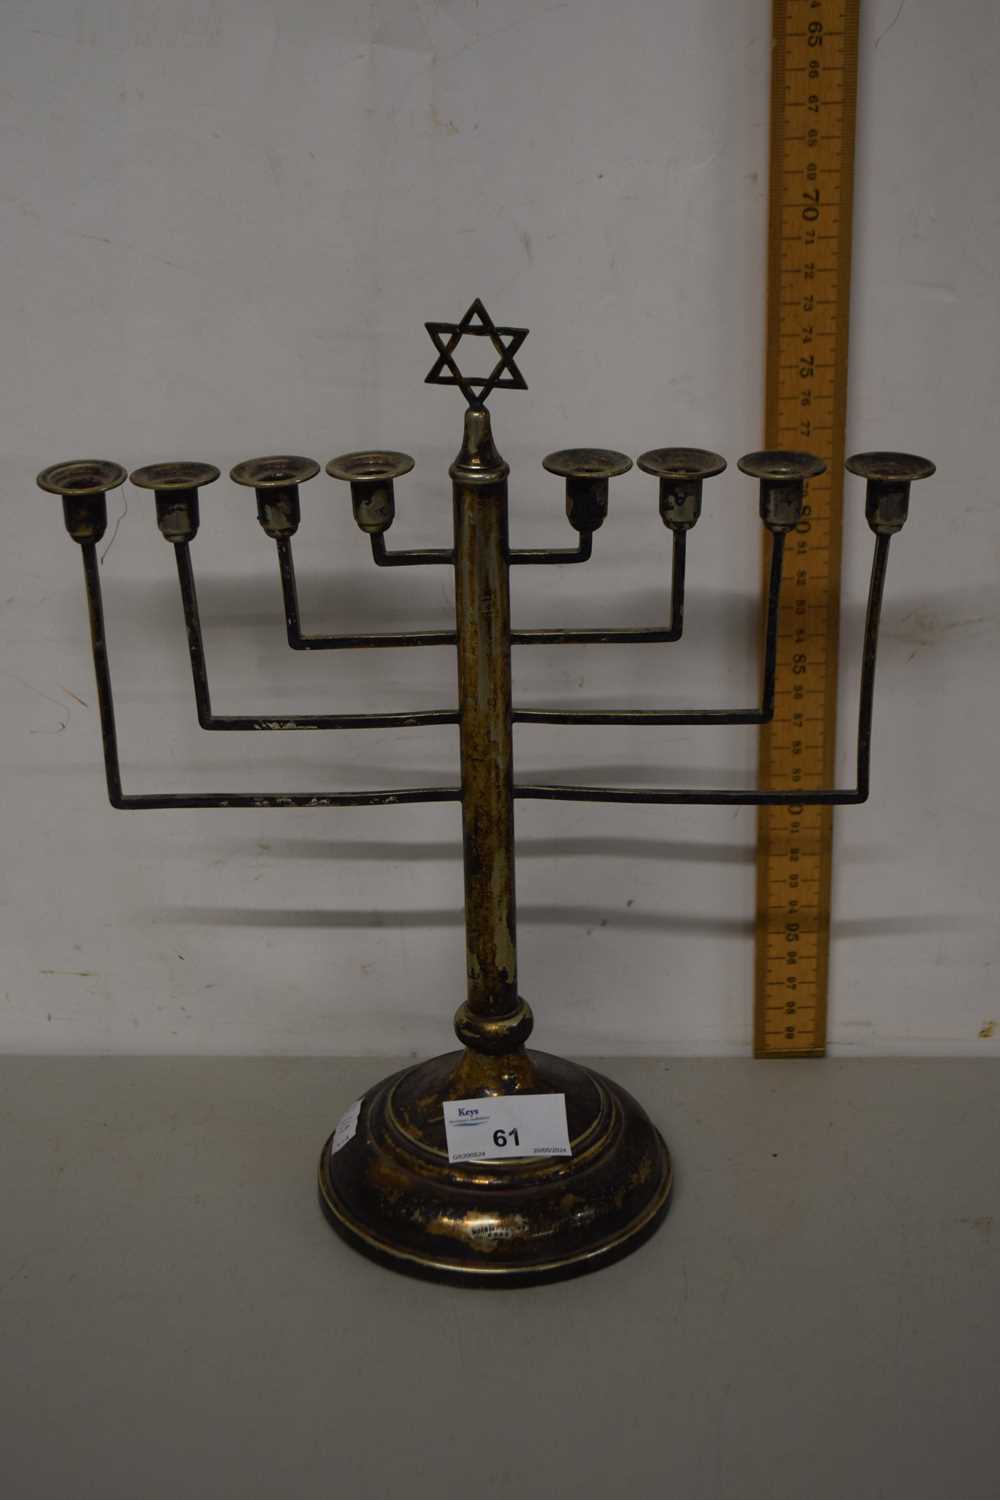 Lot 61 - Silver plated Jewish menorah candlestick